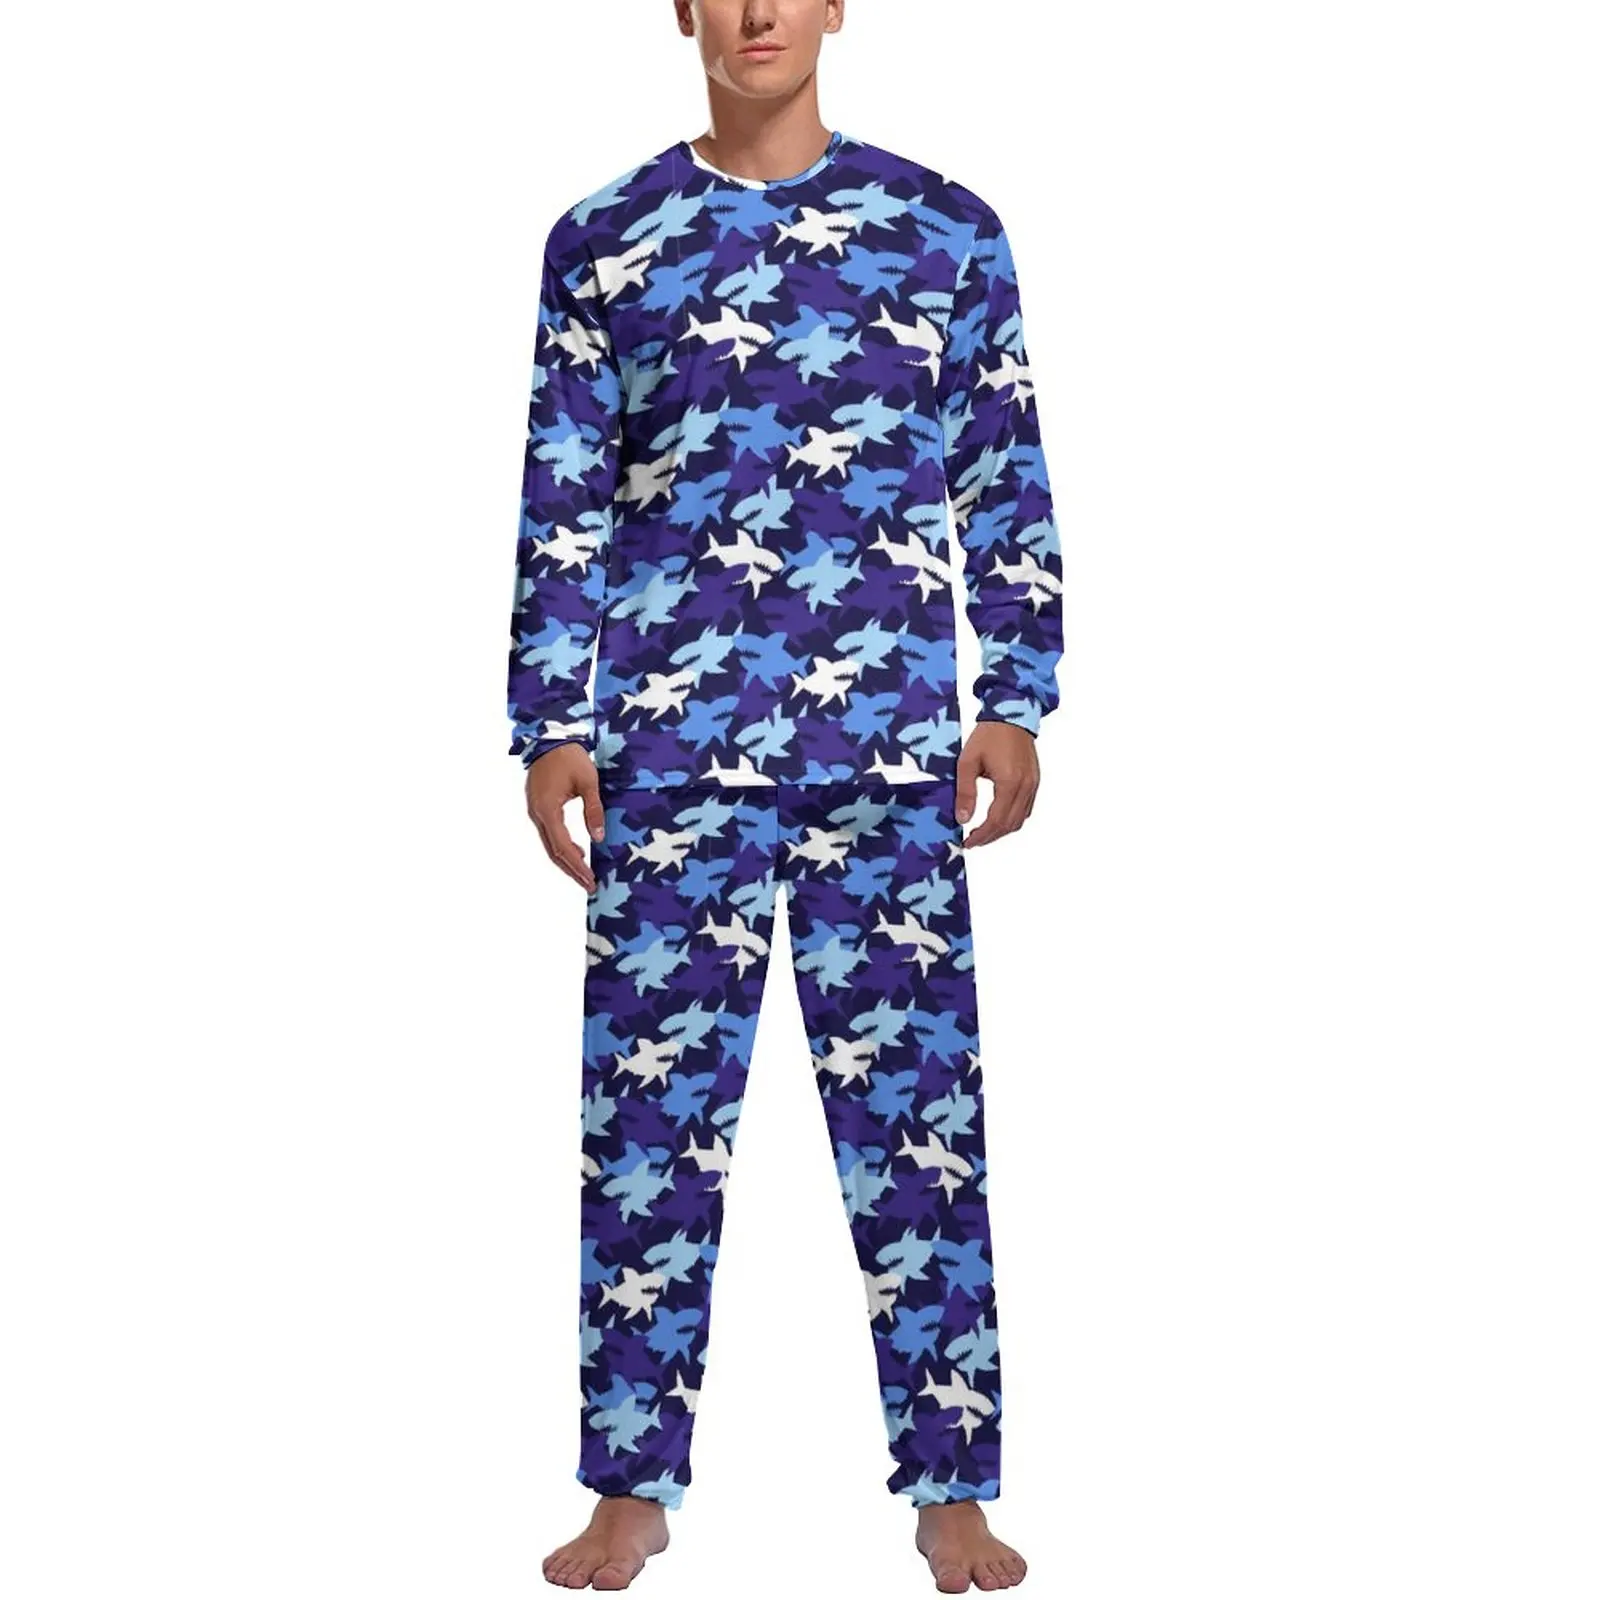 Blue Shark Camo Pajamas Cool Animal Print Men Long-Sleeve Cute Pajamas Set Two Piece Aesthetic Spring Custom Nightwear Gift Idea